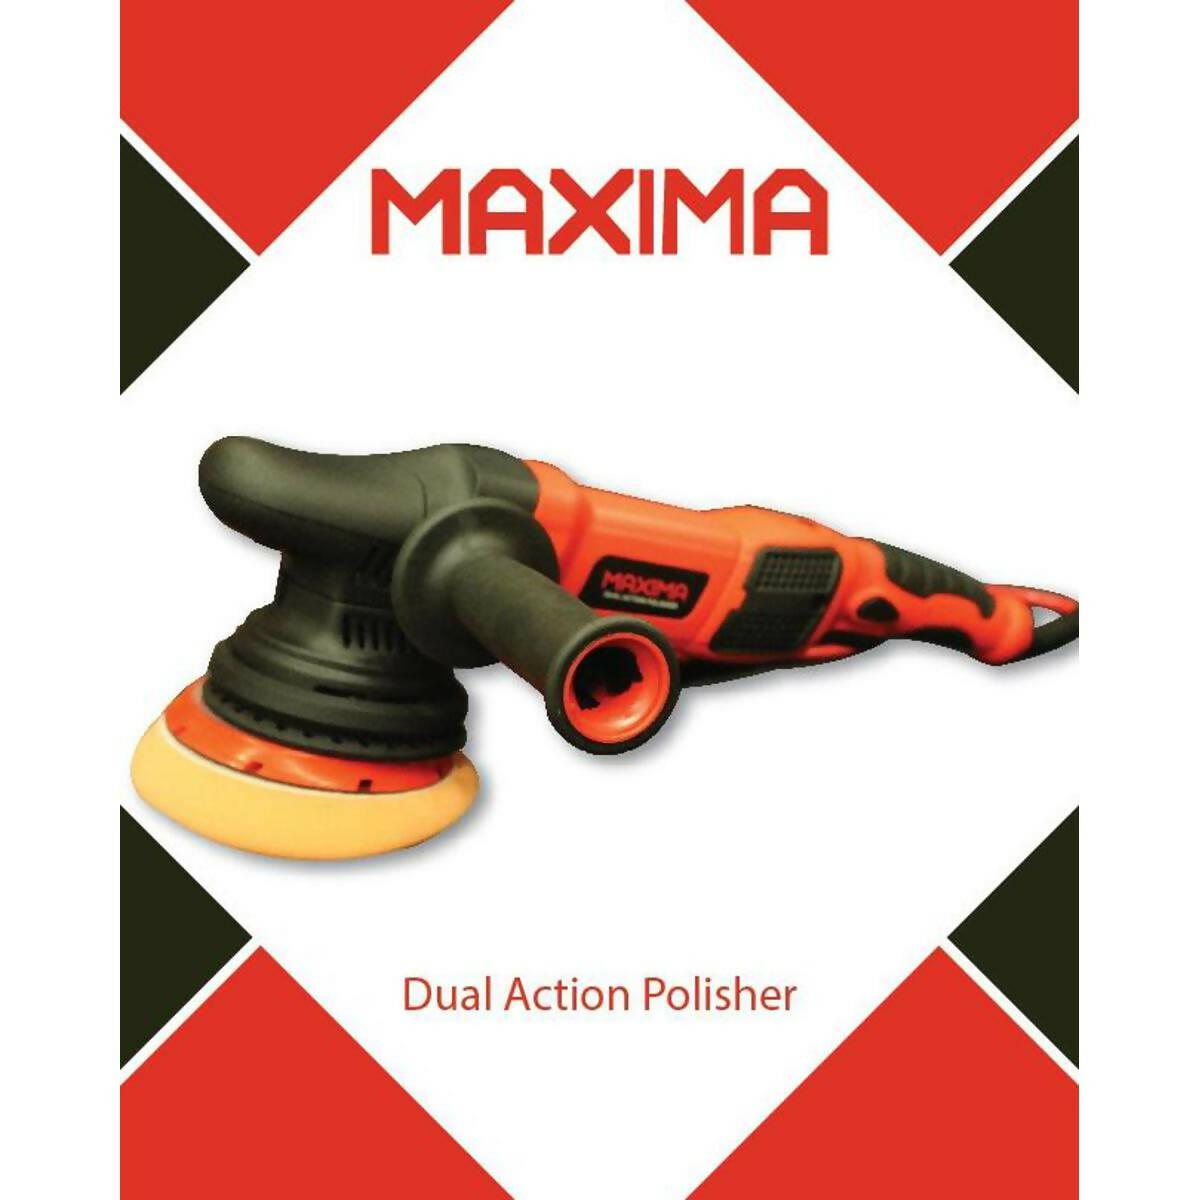 Maxima Dual Action Polisher - 900 Watts - 15mm Orbital - ValueBox